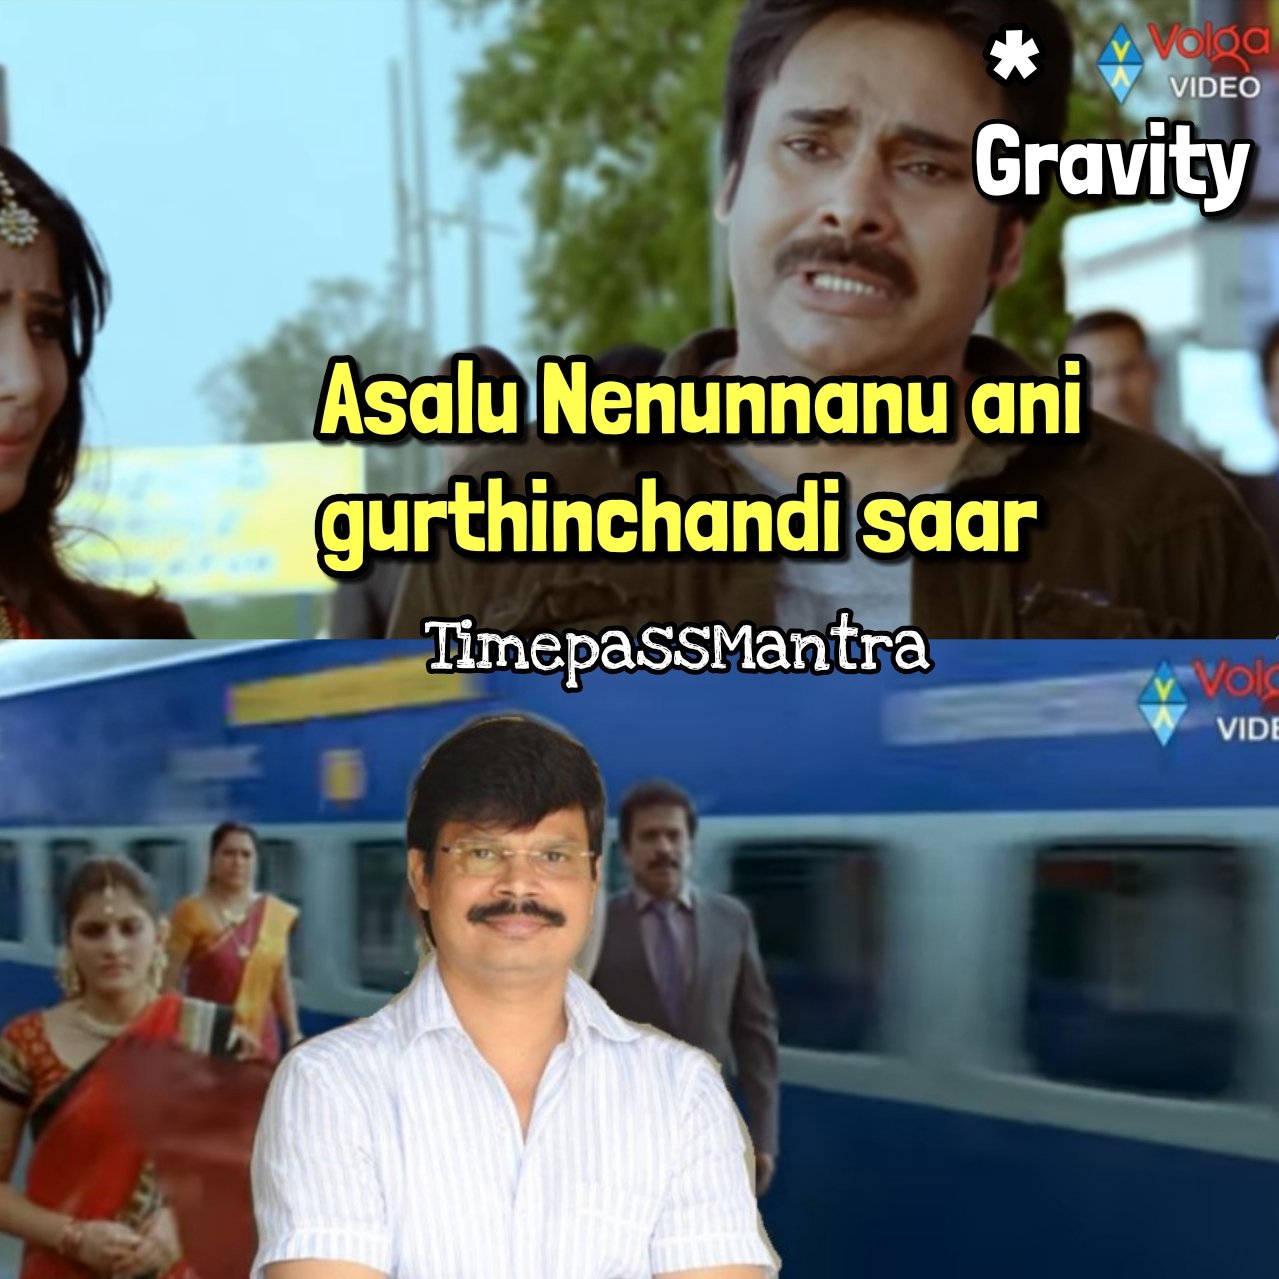 Timepass Mantra Comedy Memes Telugu (@TimepassMantra) / Twitter